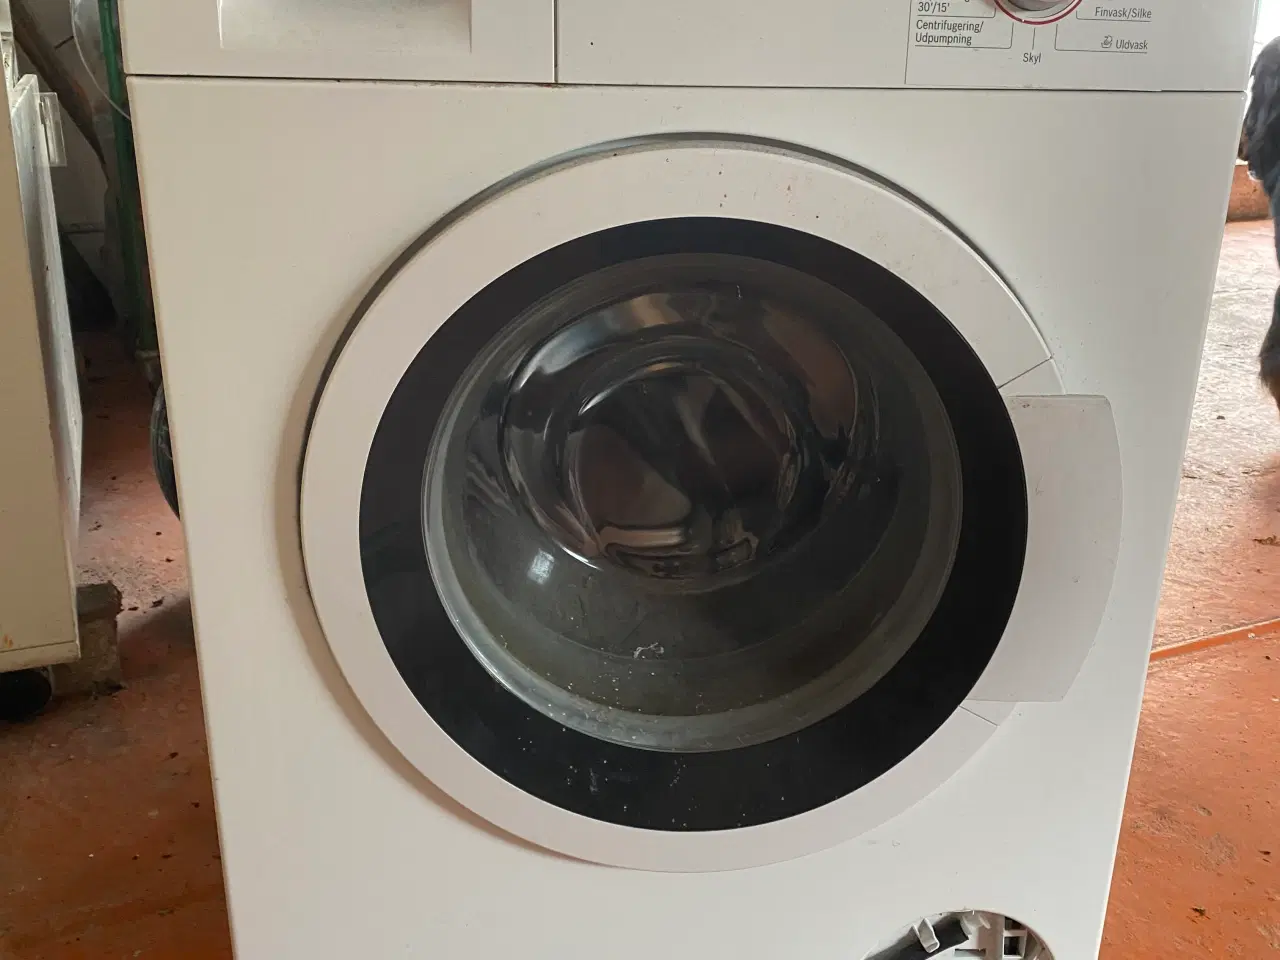 Billede 1 - Bosch vaskemaskine